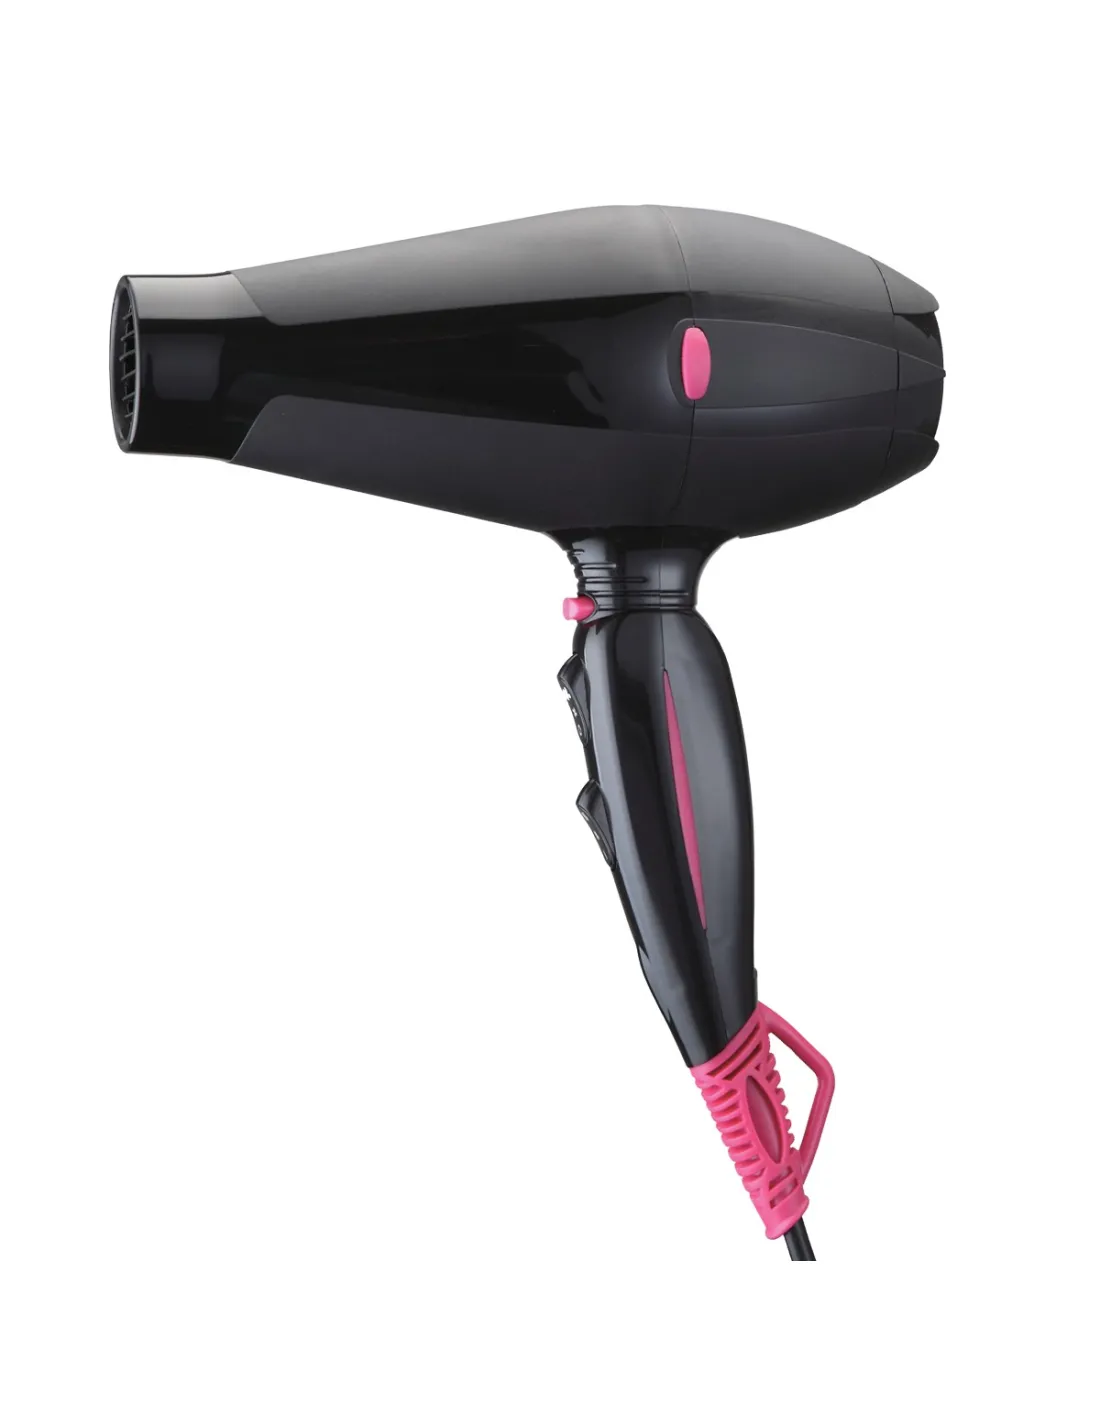 Фен для волос розовый. Фен hair Dryer Pink. Фен Redmond Ionic professional 2000w. Max Pro Neo Hairdryer. 850 W фен.